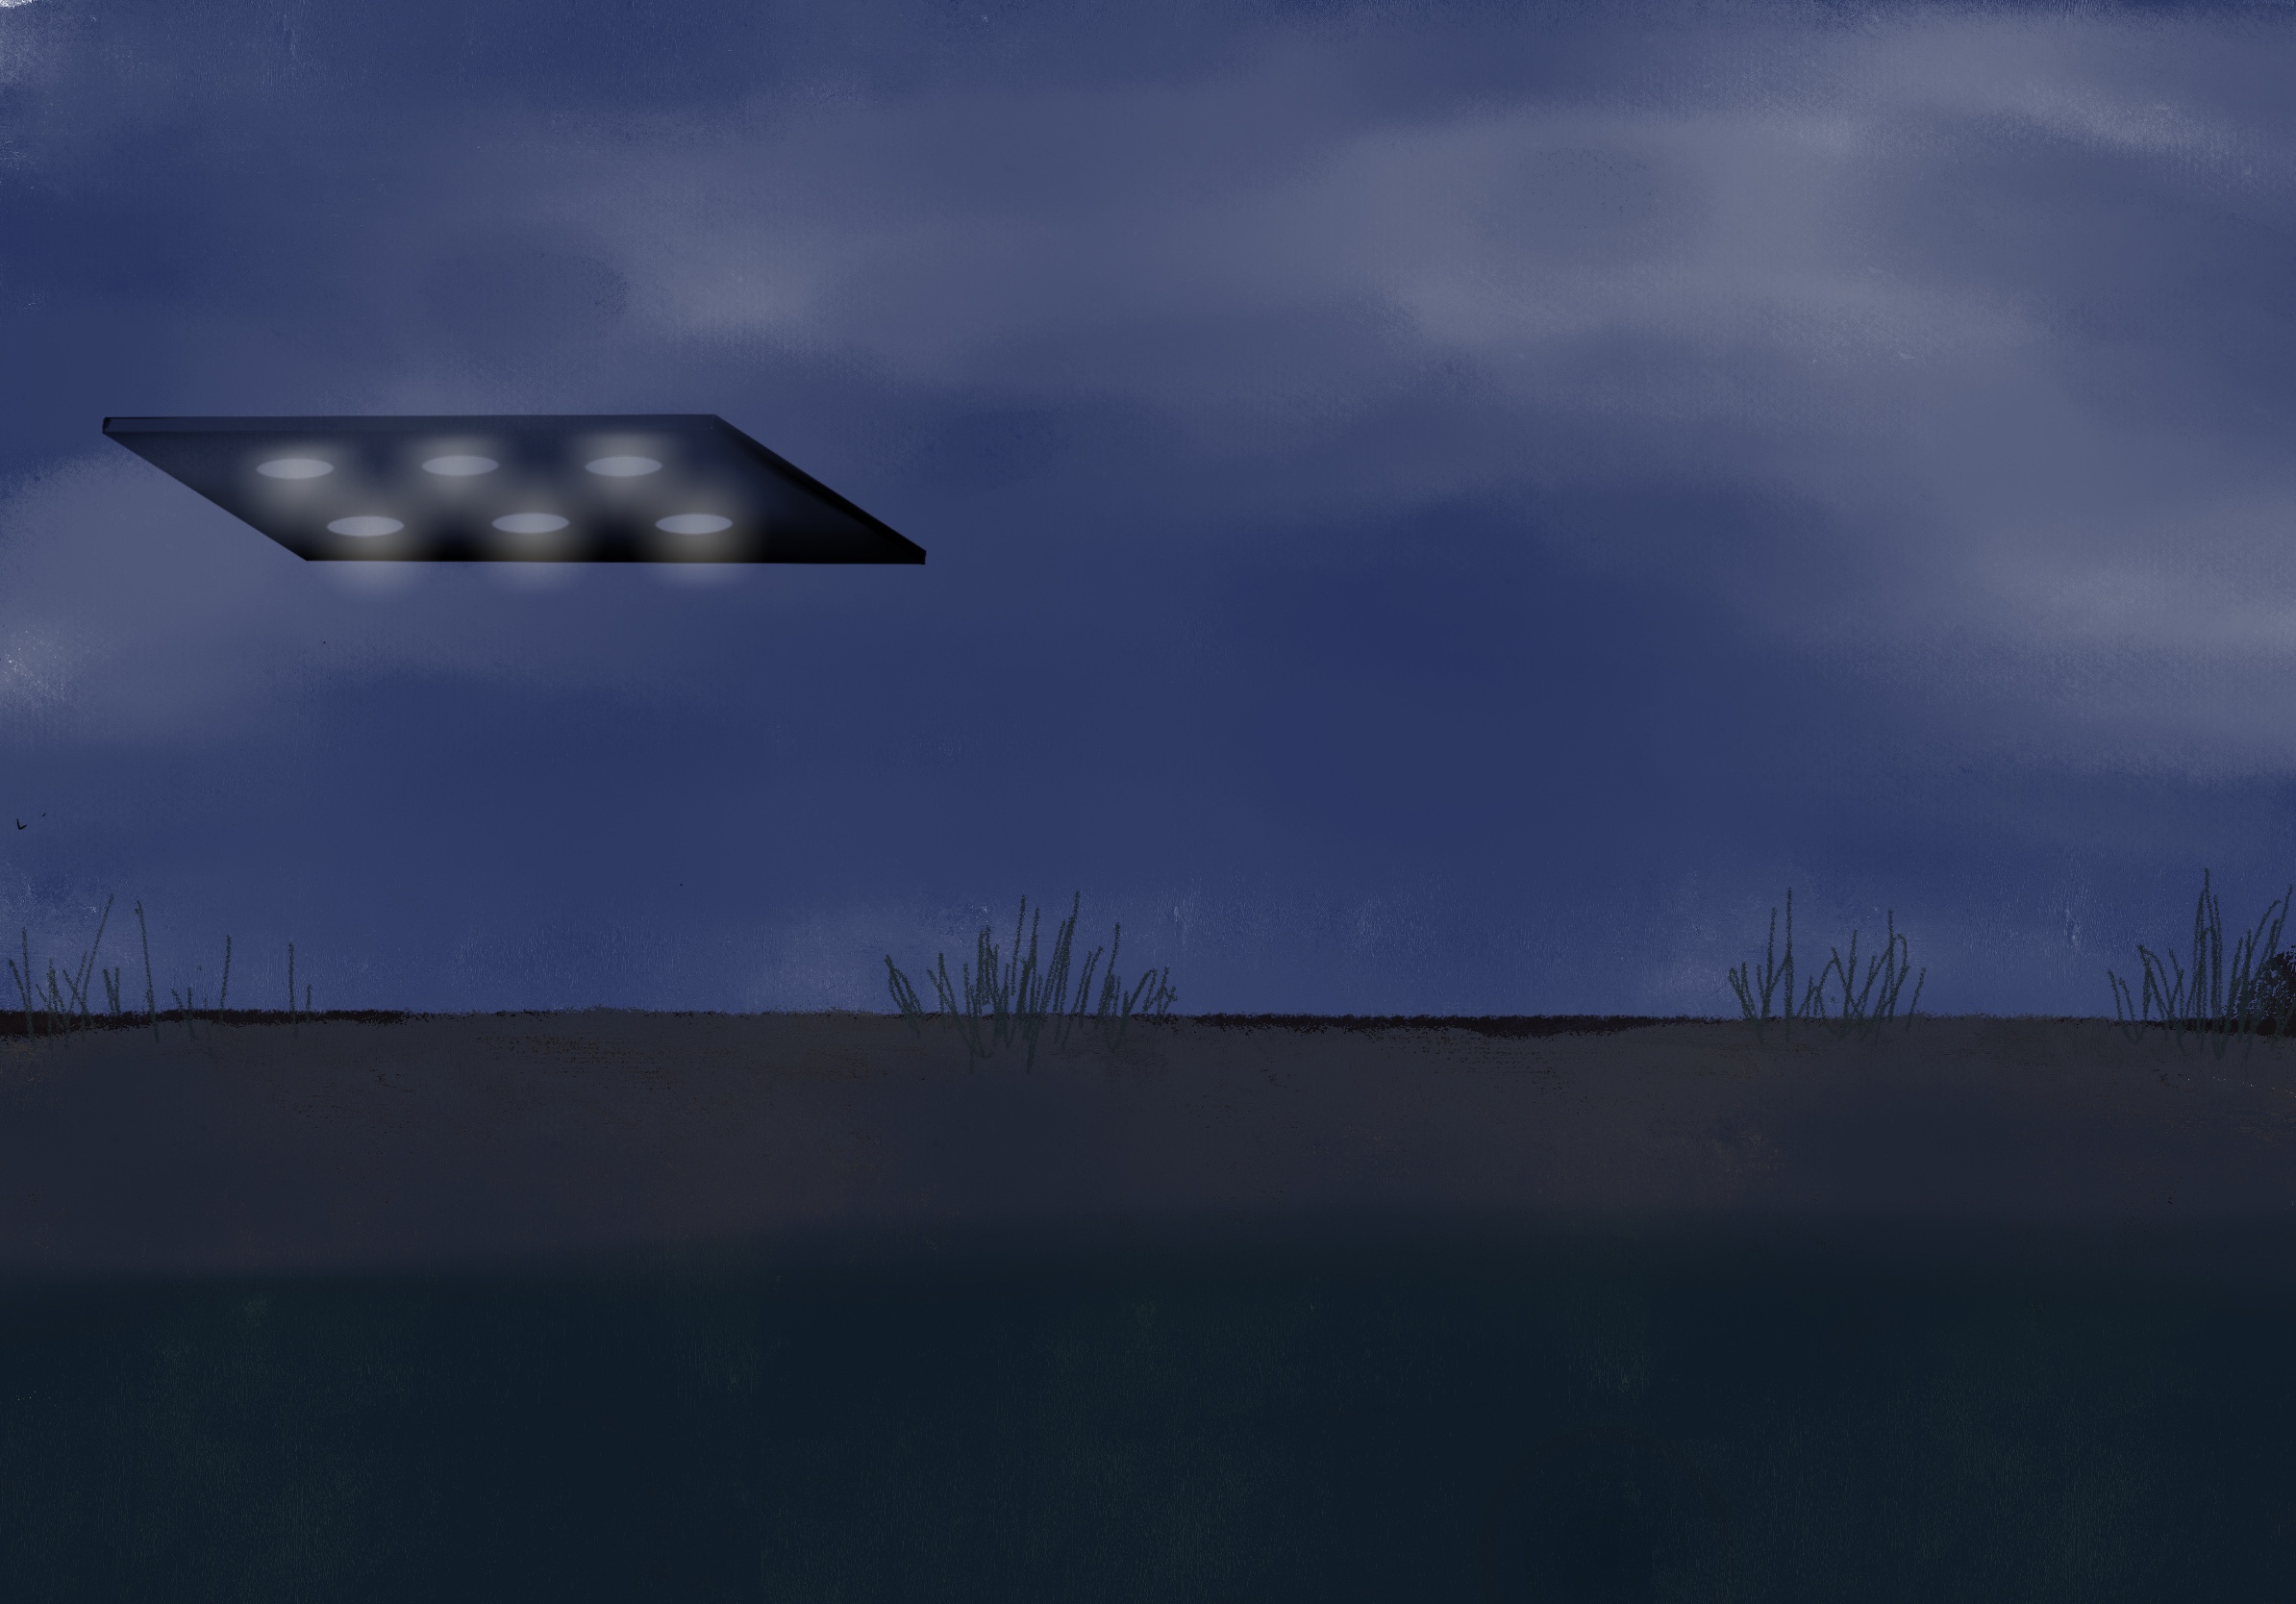 Dark rectangular object with 6 lights flying North toward Atlantic Beach along the coast.